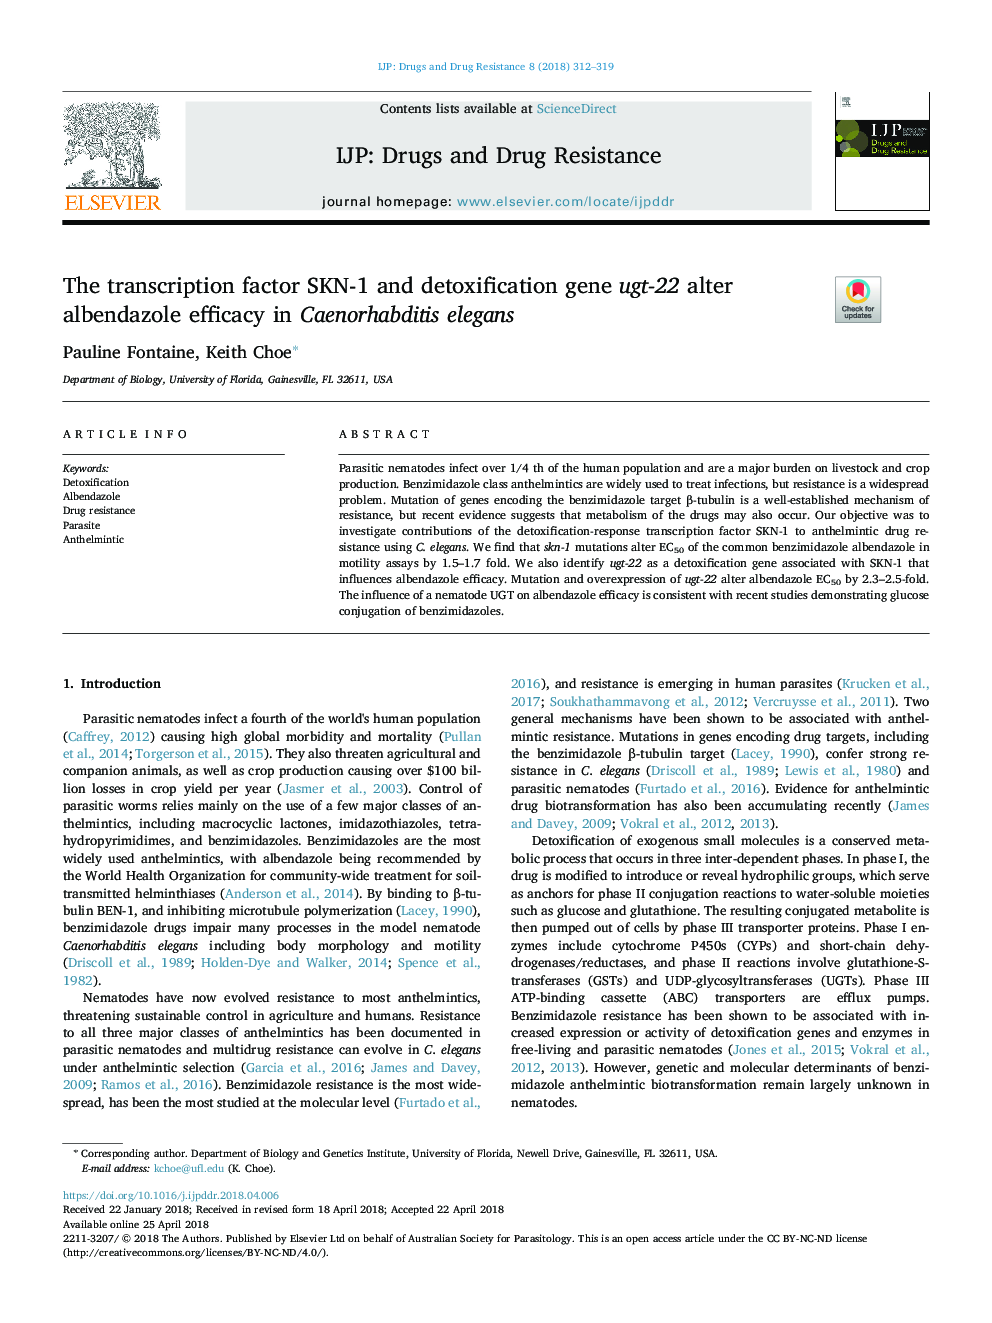 The transcription factor SKN-1 and detoxification gene ugt-22 alter albendazole efficacy in Caenorhabditis elegans